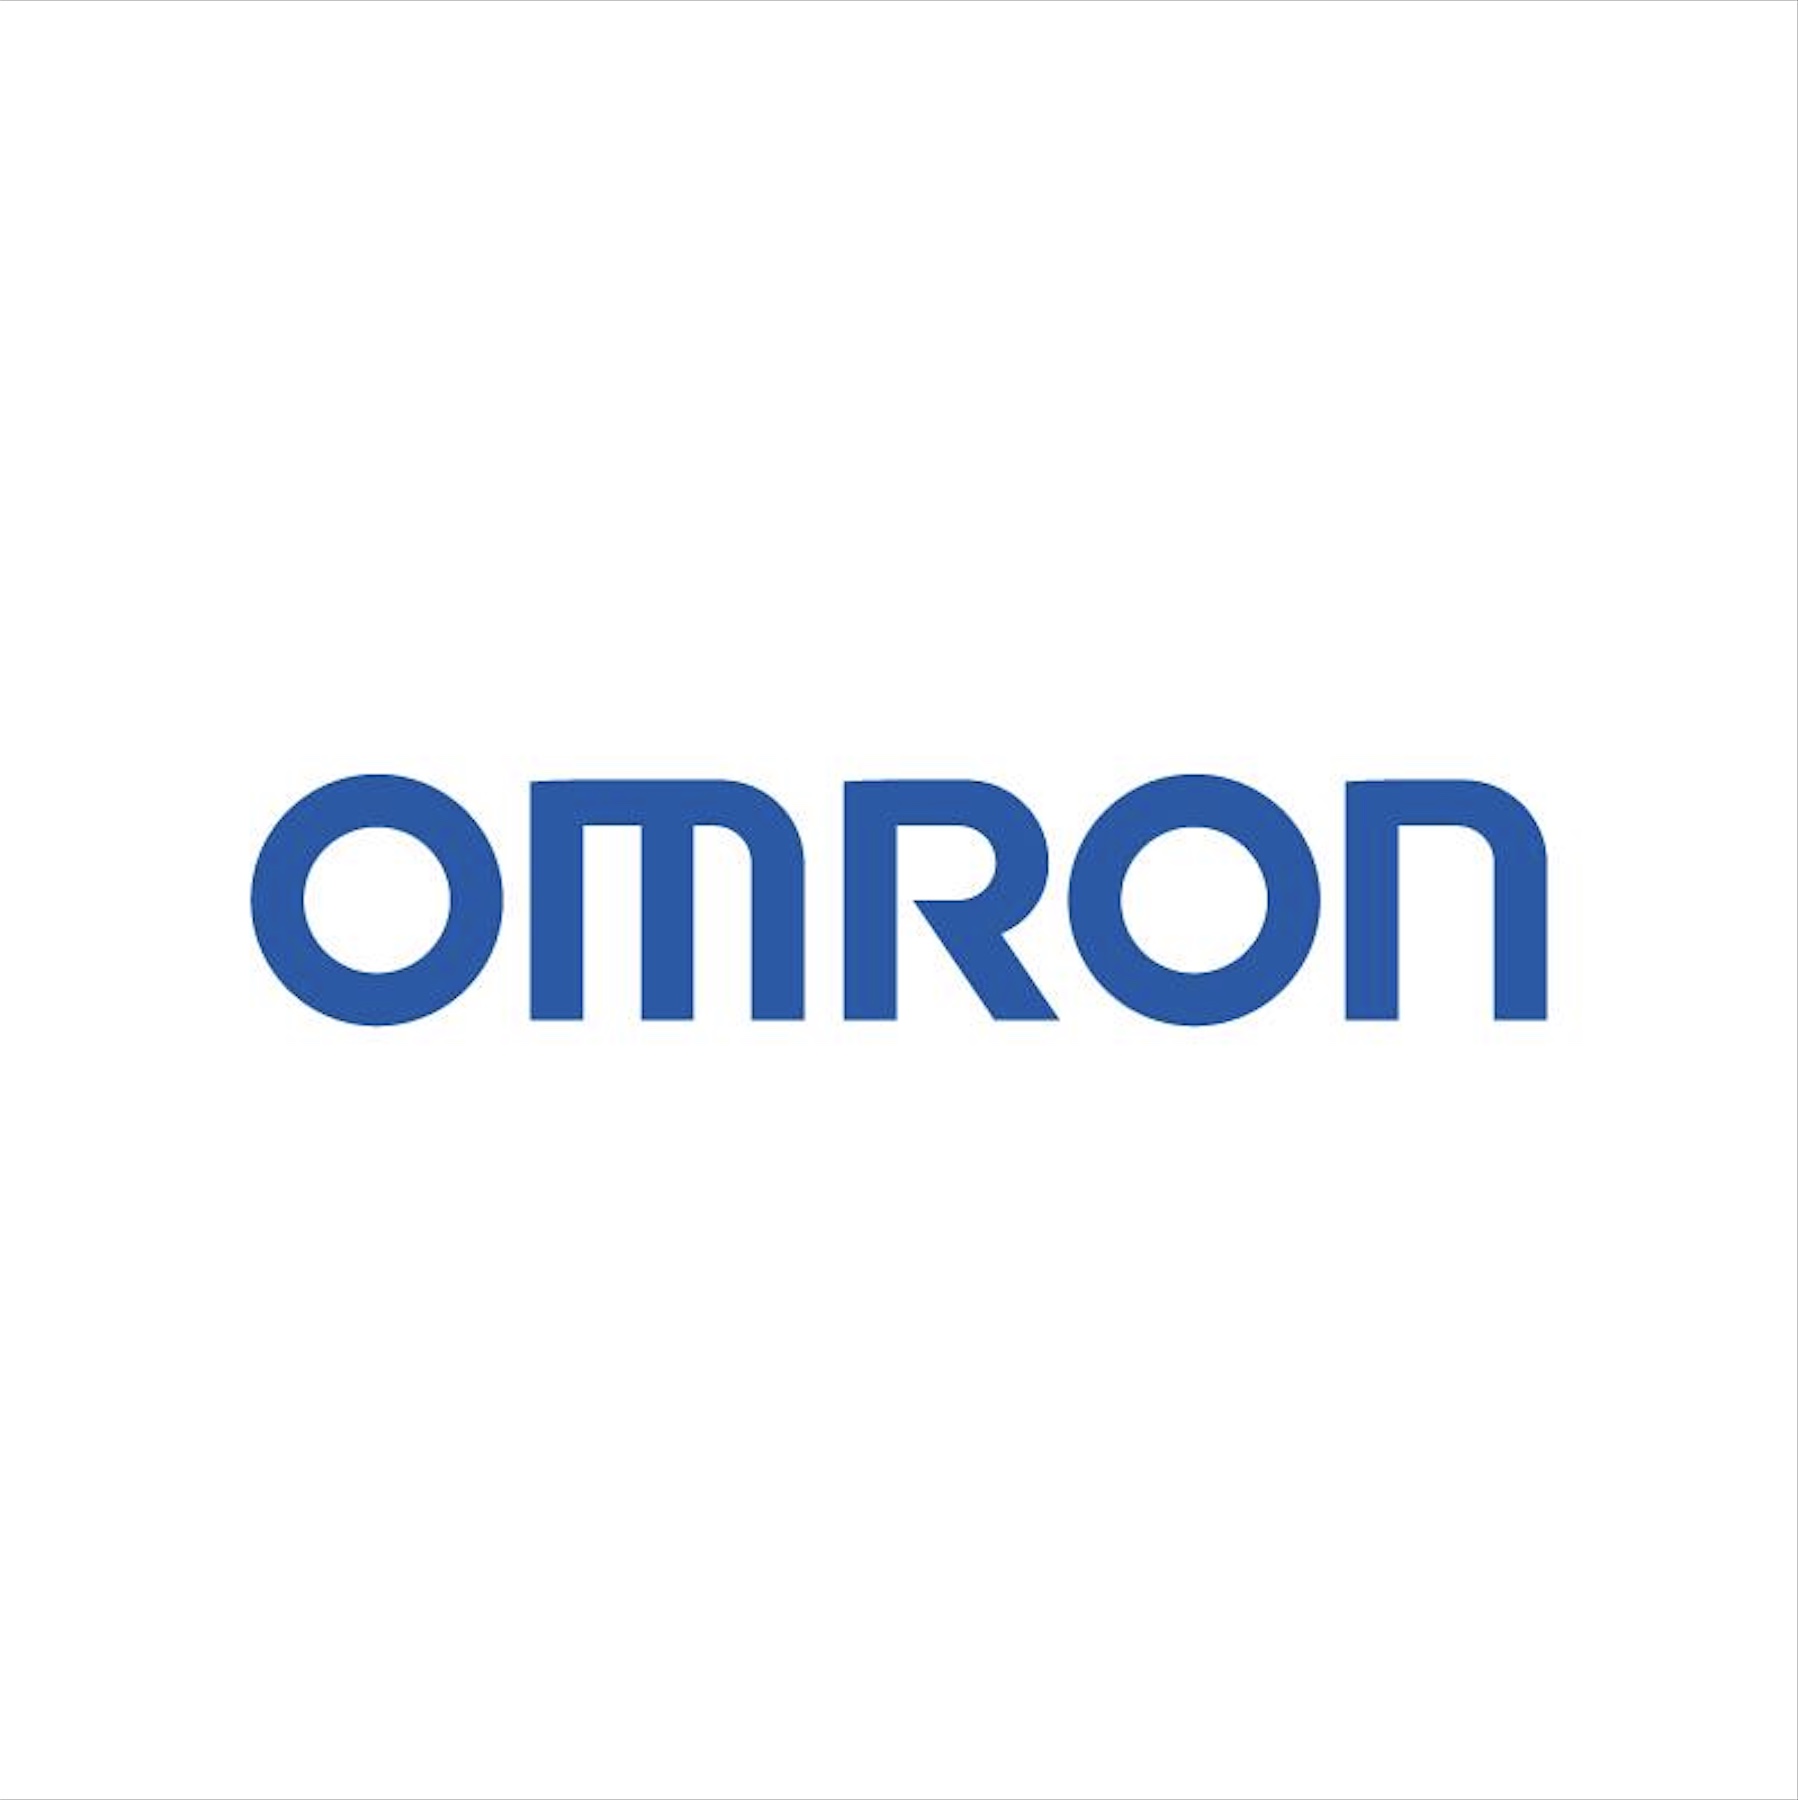 Omron Logo 1 -